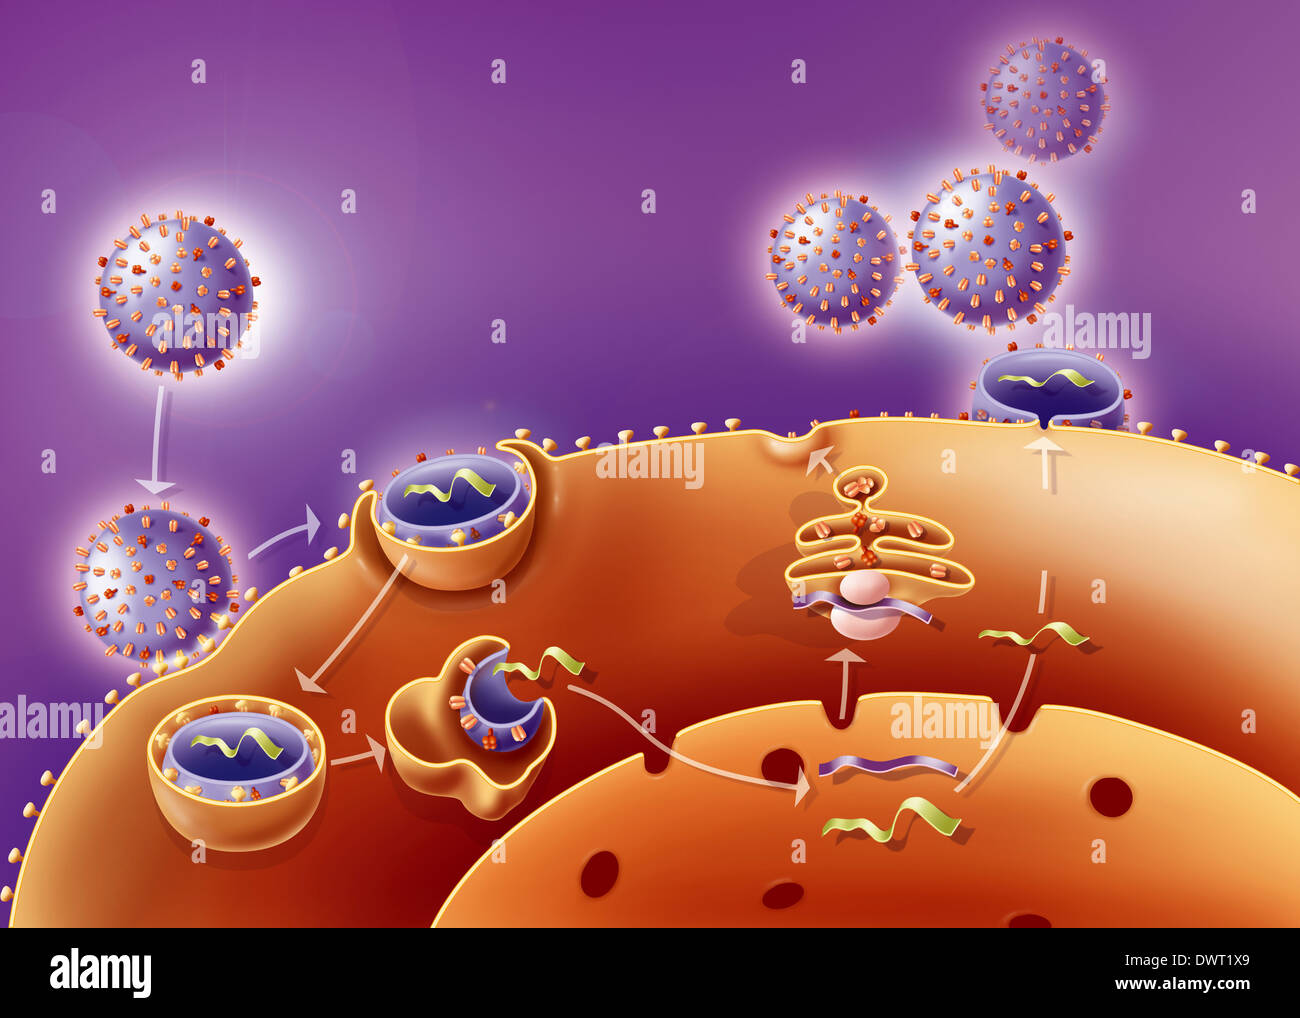 Influenza virus infection Stock Photo